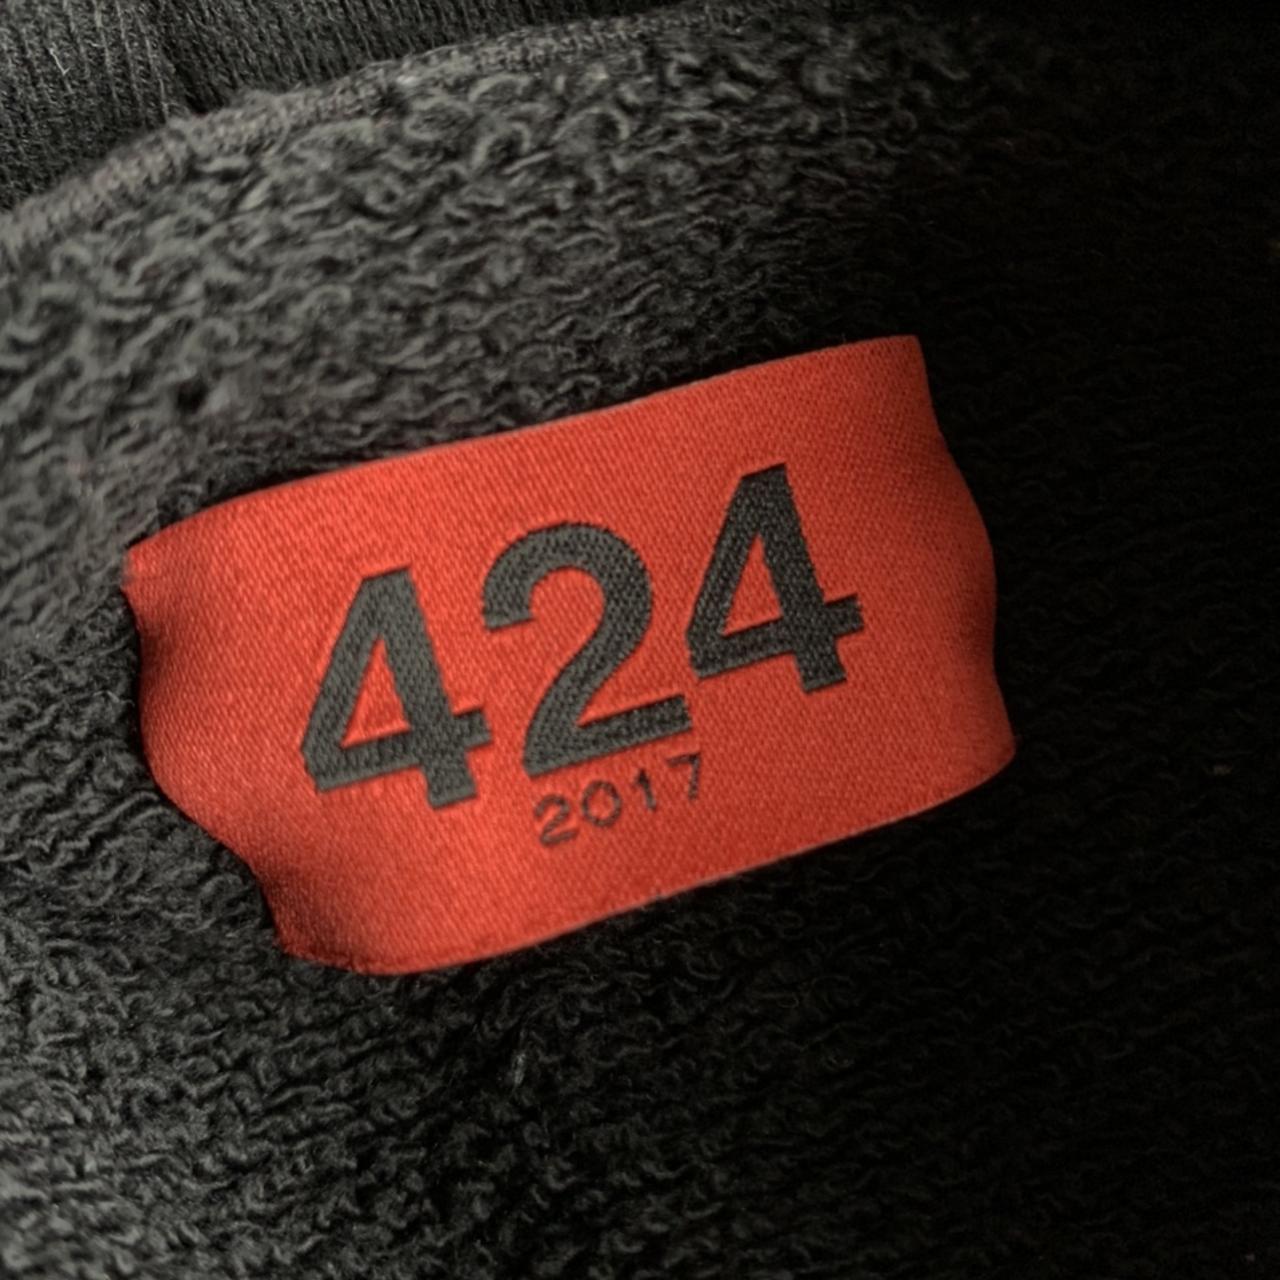 Product Image 2 - 424 2017 varsity black hoodie
Medium